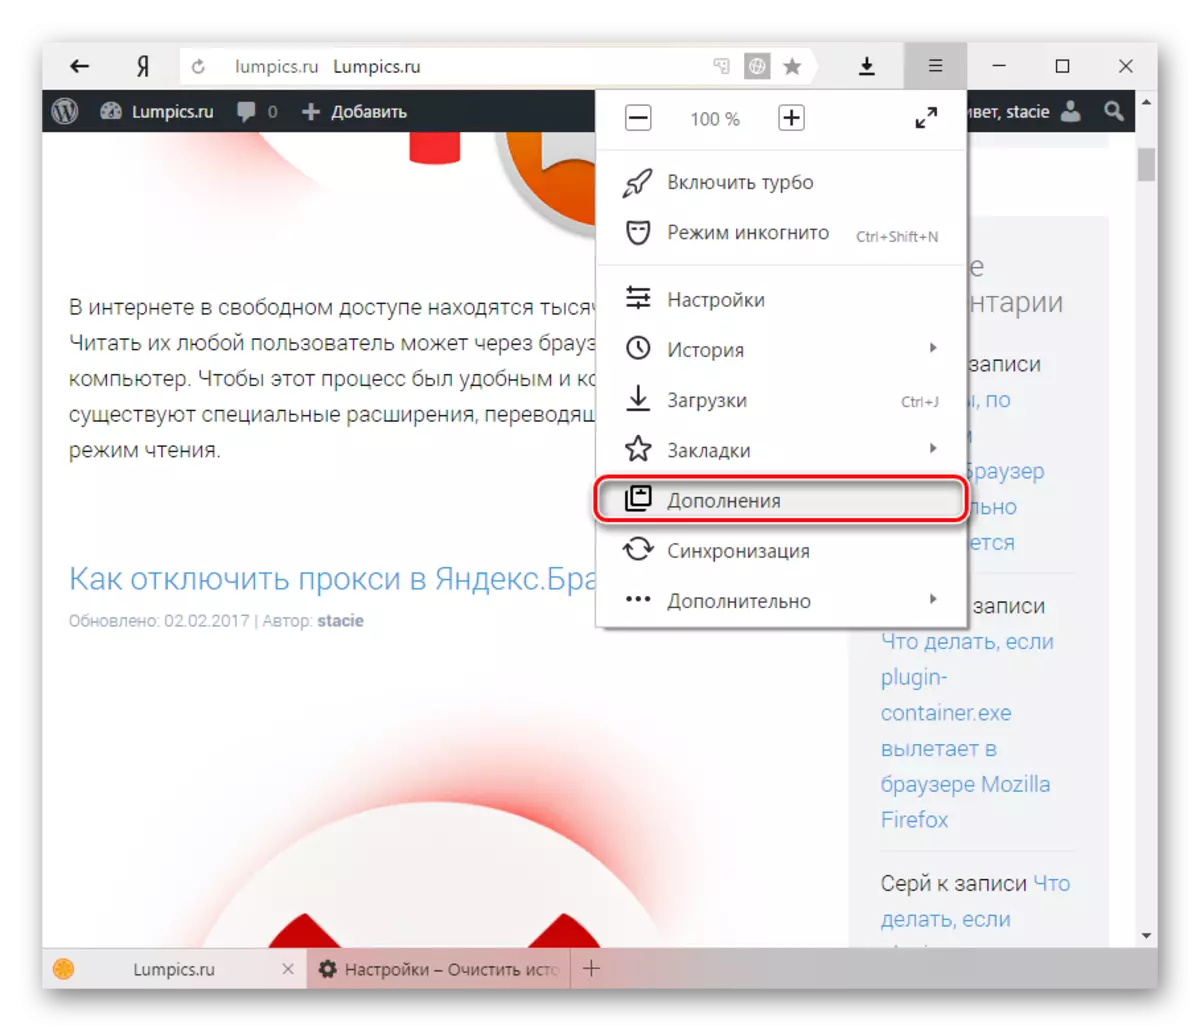 Yandex.browser ನಲ್ಲಿ ಪೂರಕಗಳು